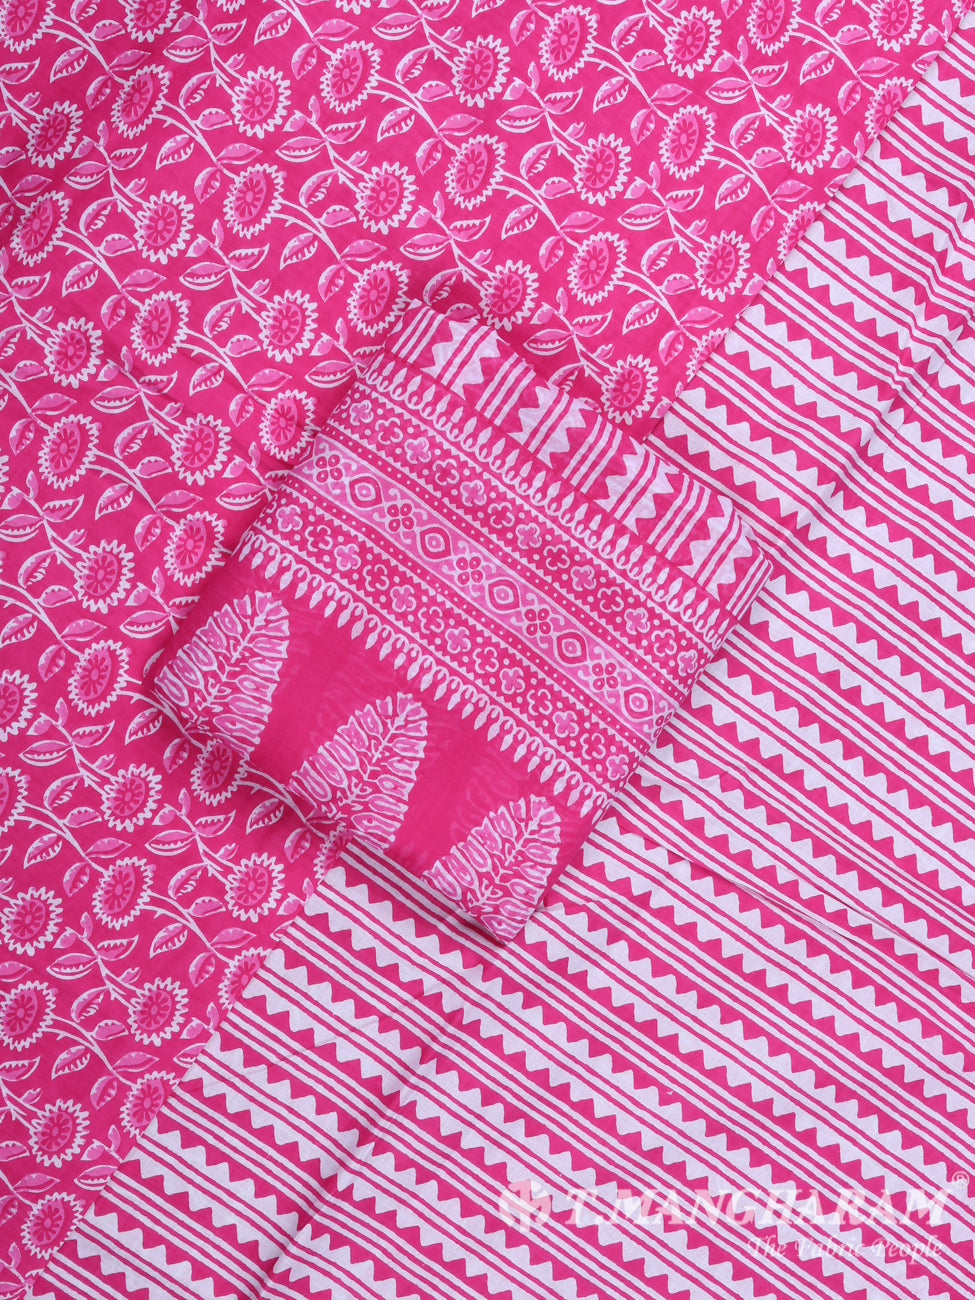 Pink Cotton Chudidhar Fabric Set - EH1080 view-1